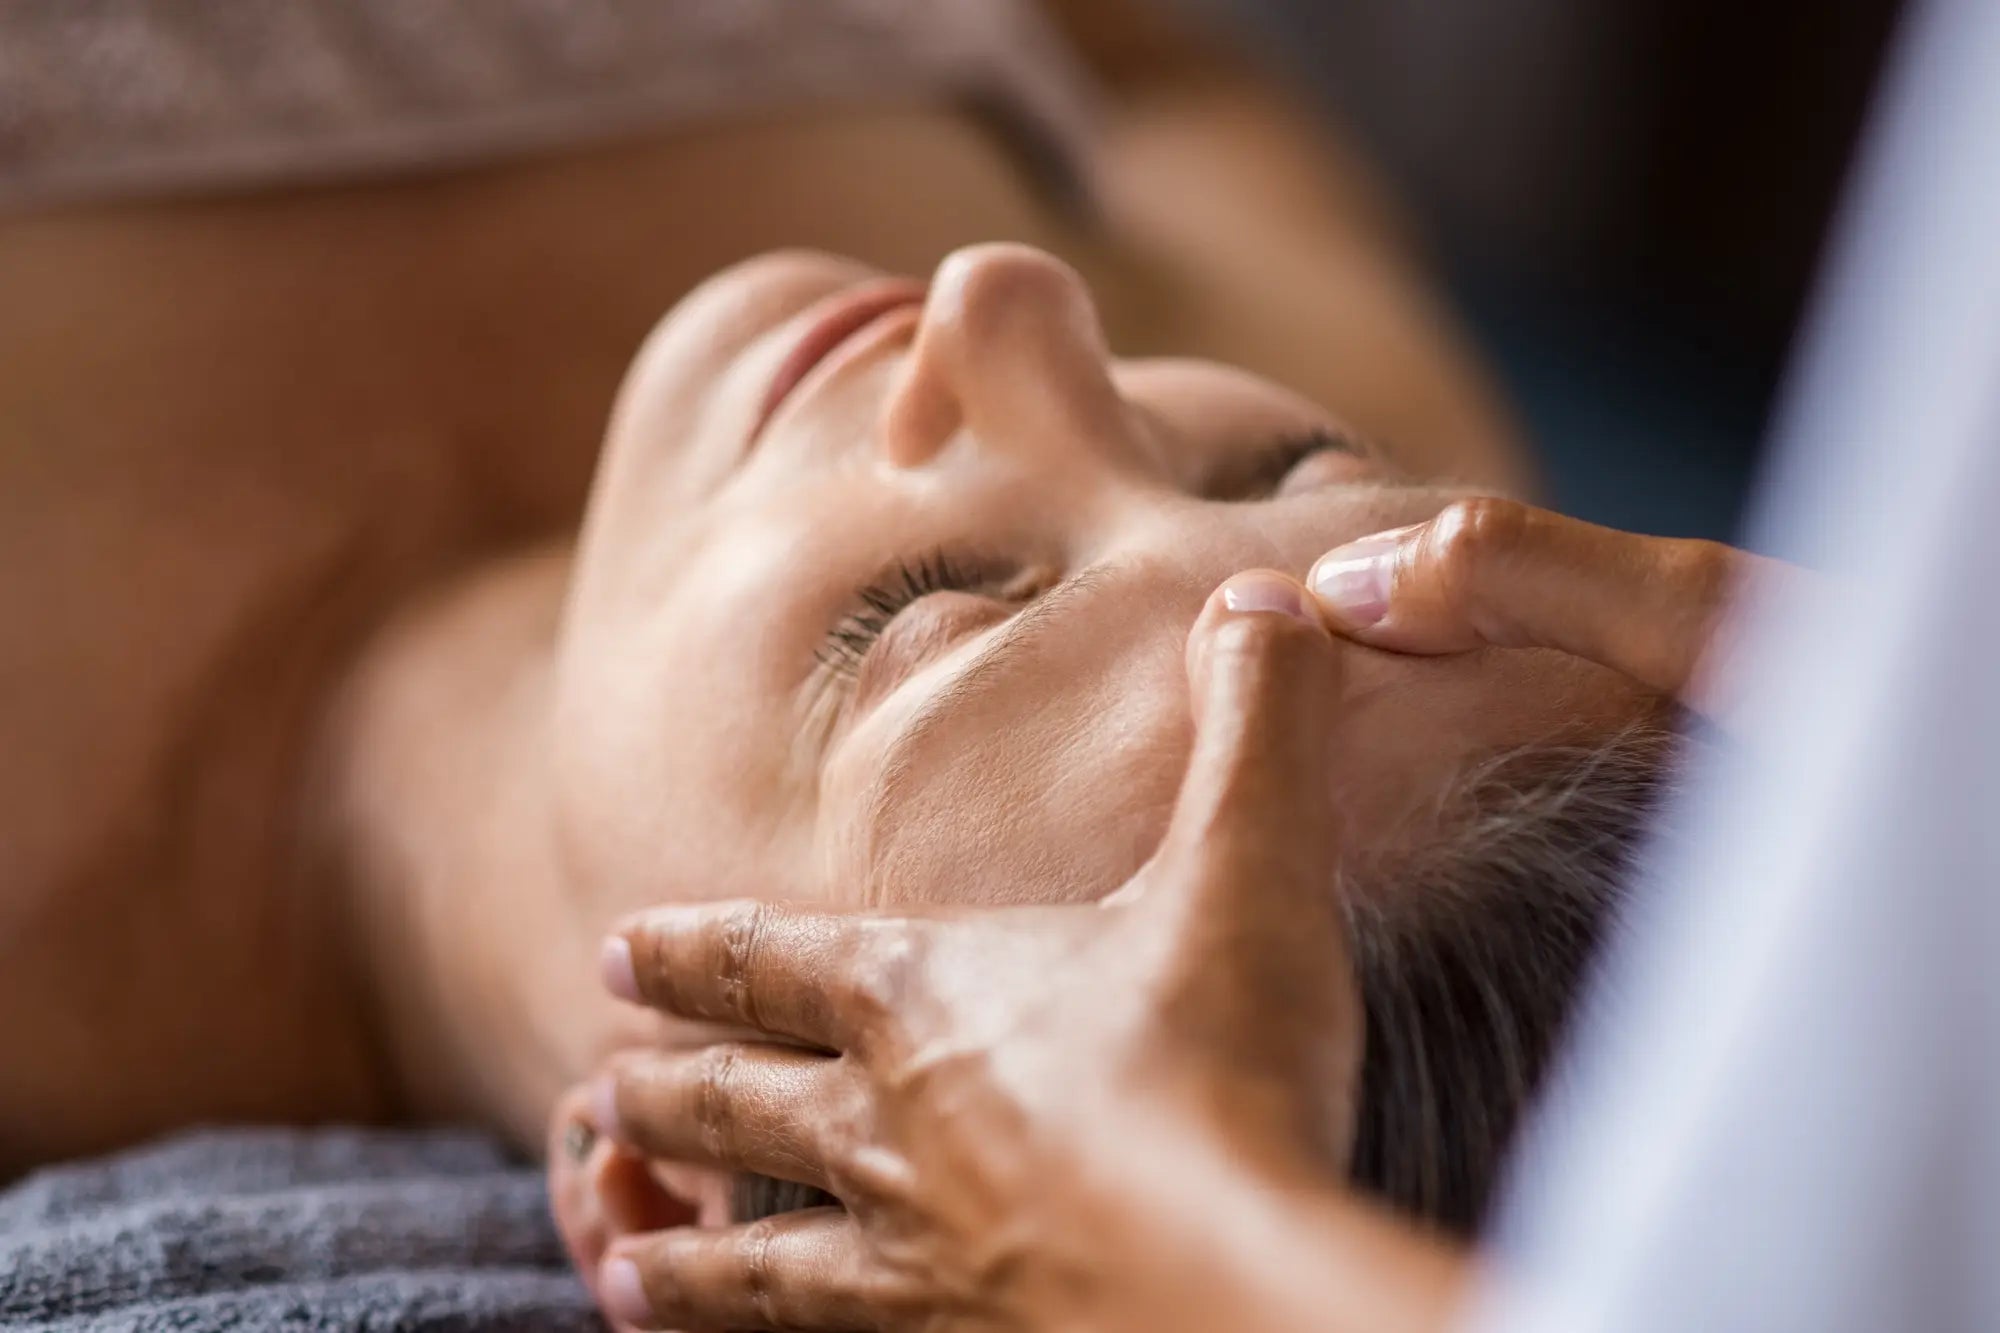 How can massage help my headaches?